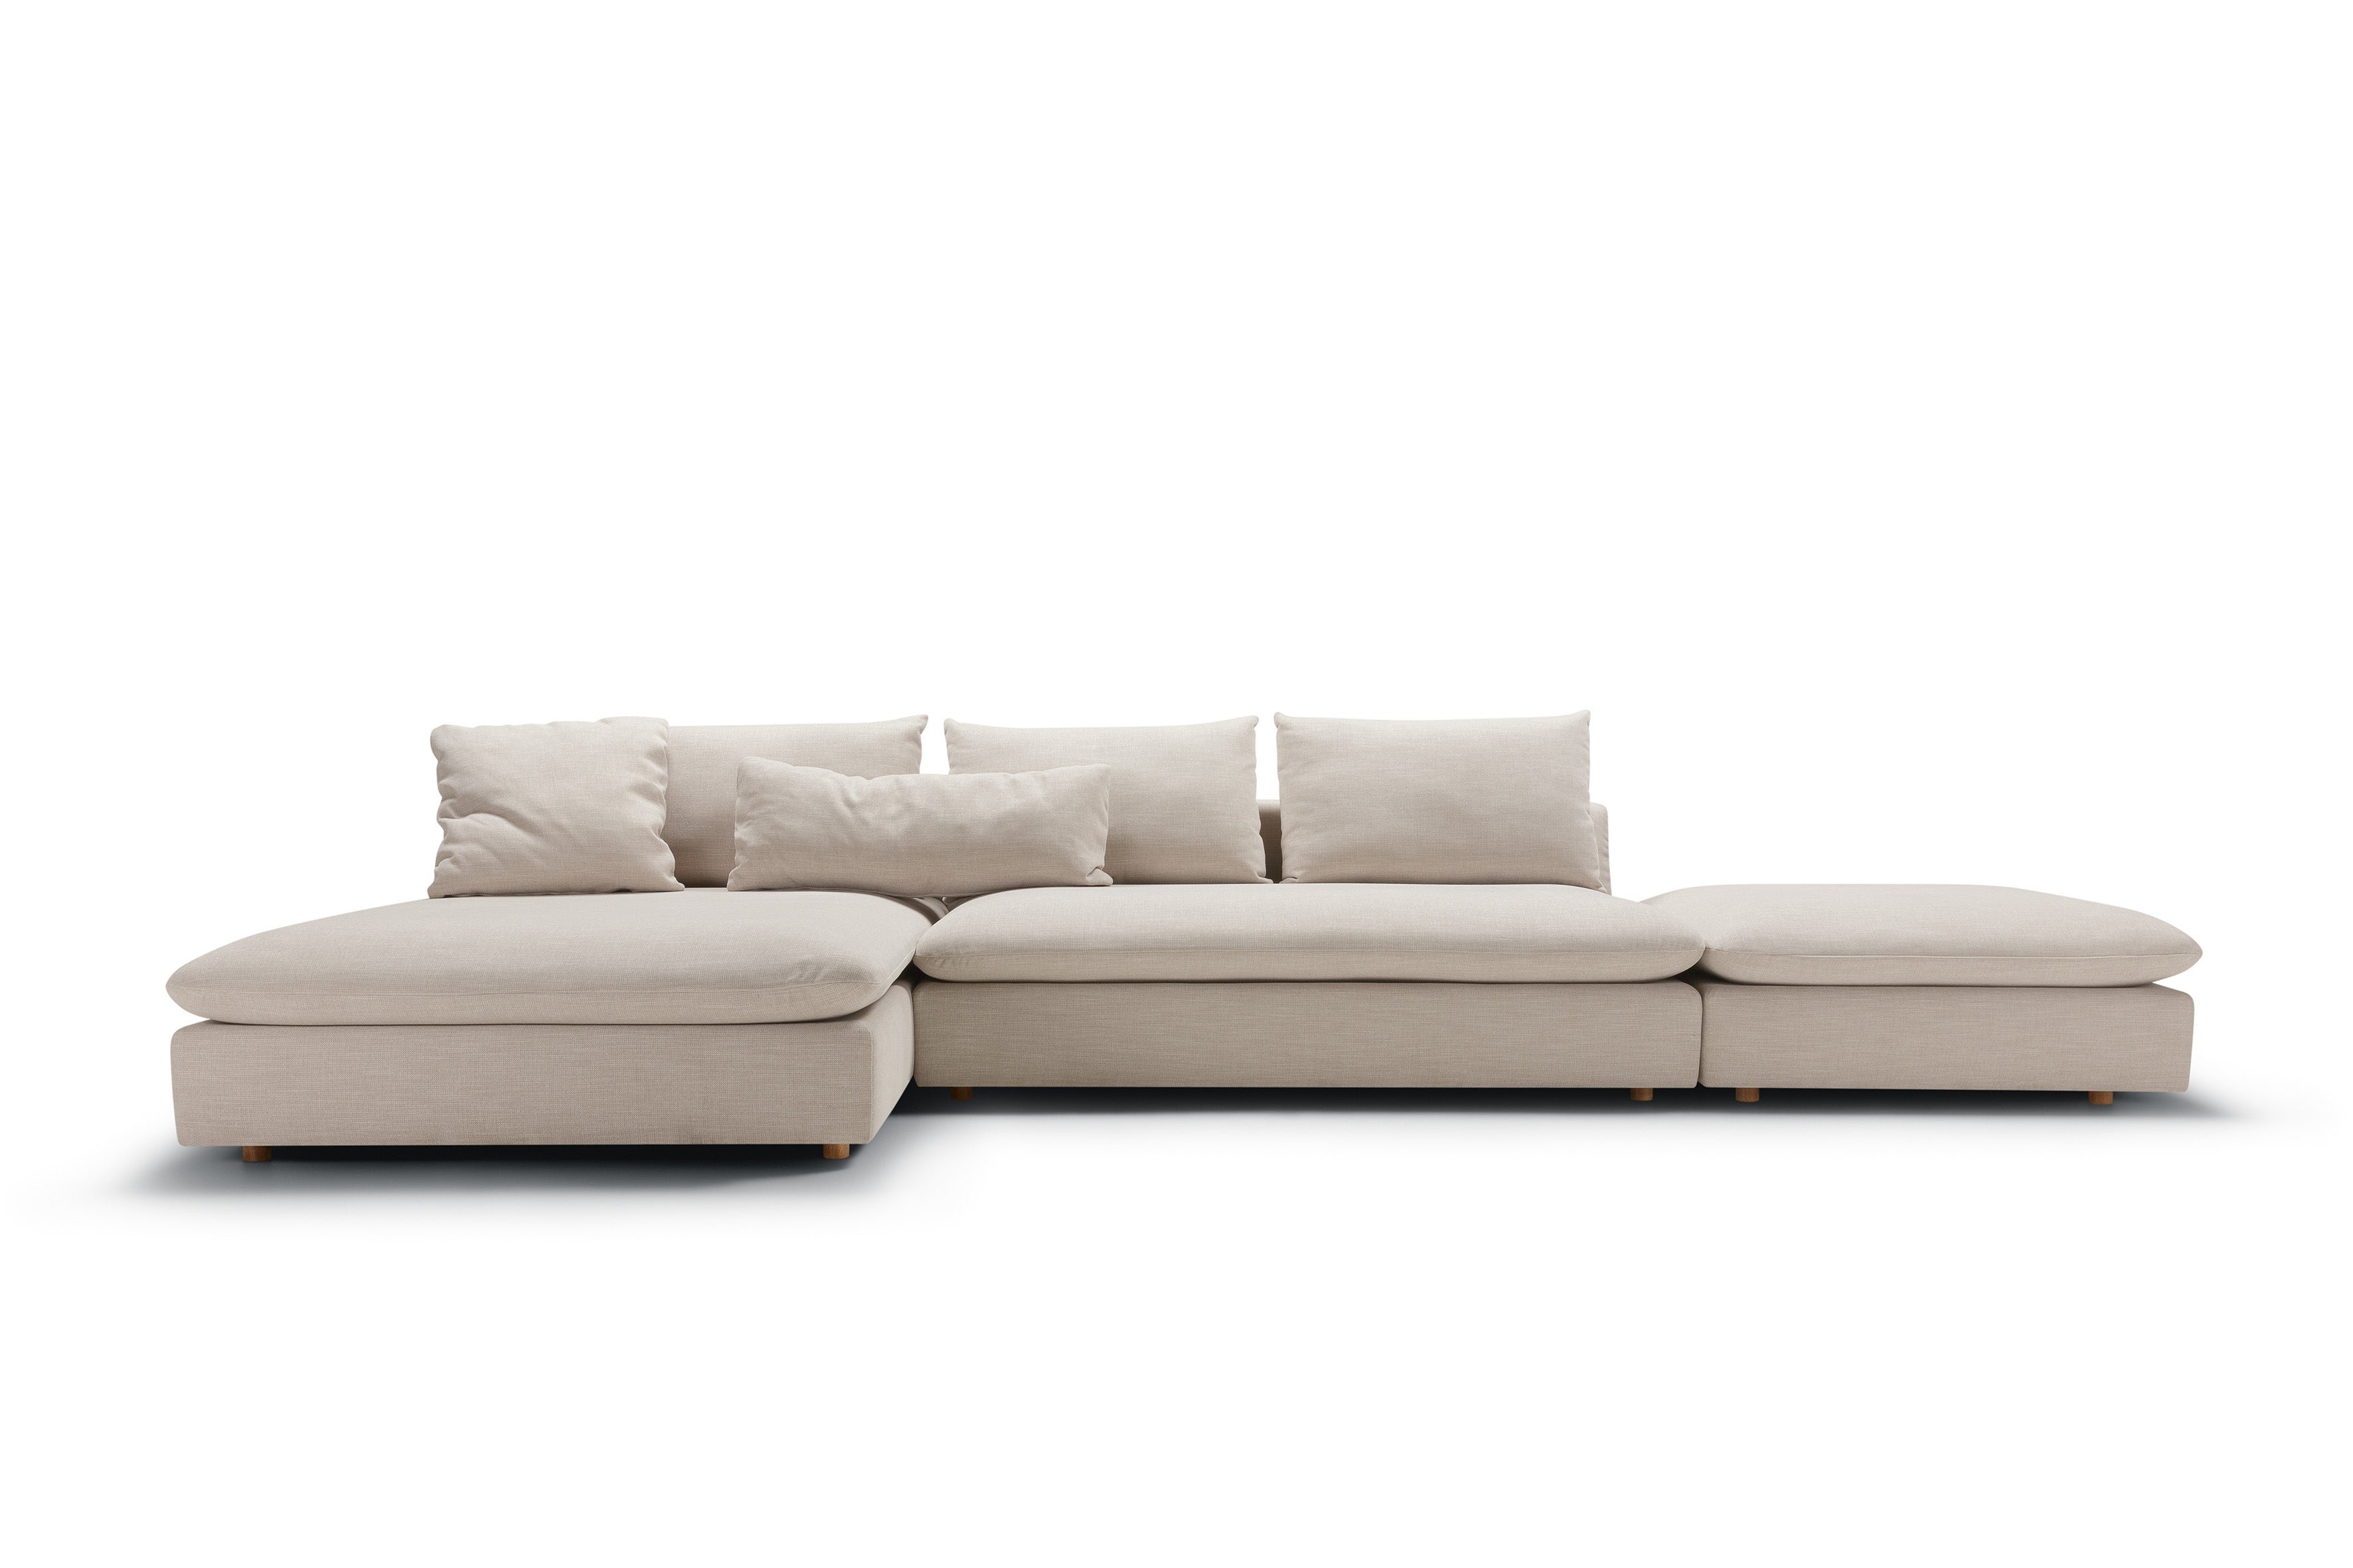 Mastrella Milly Set 2 Sofa